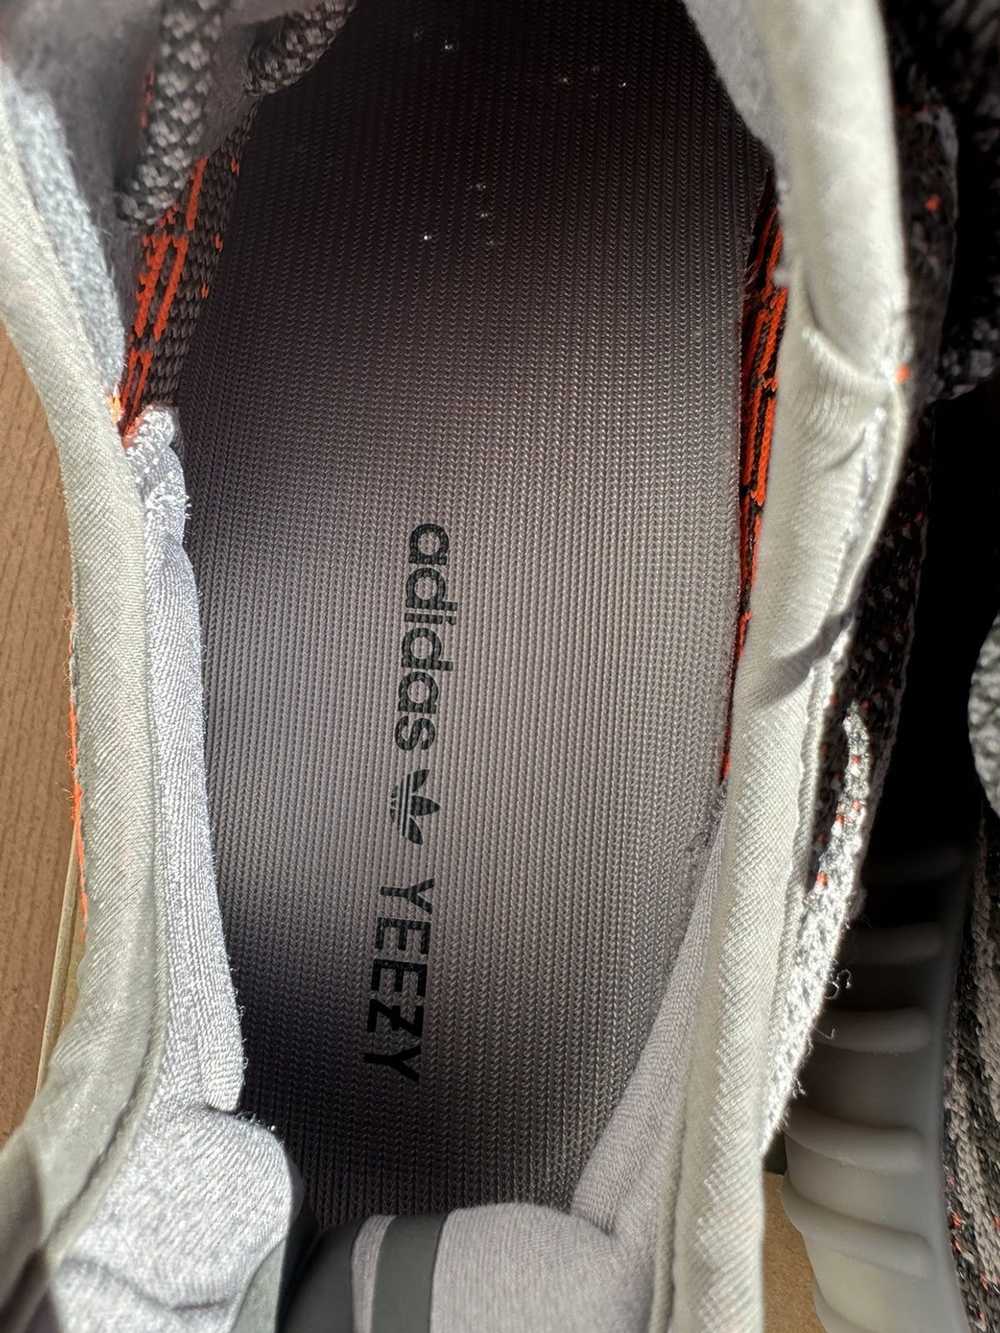 Adidas Yeezy Boost 350 V2 Beluga Reflective - image 9